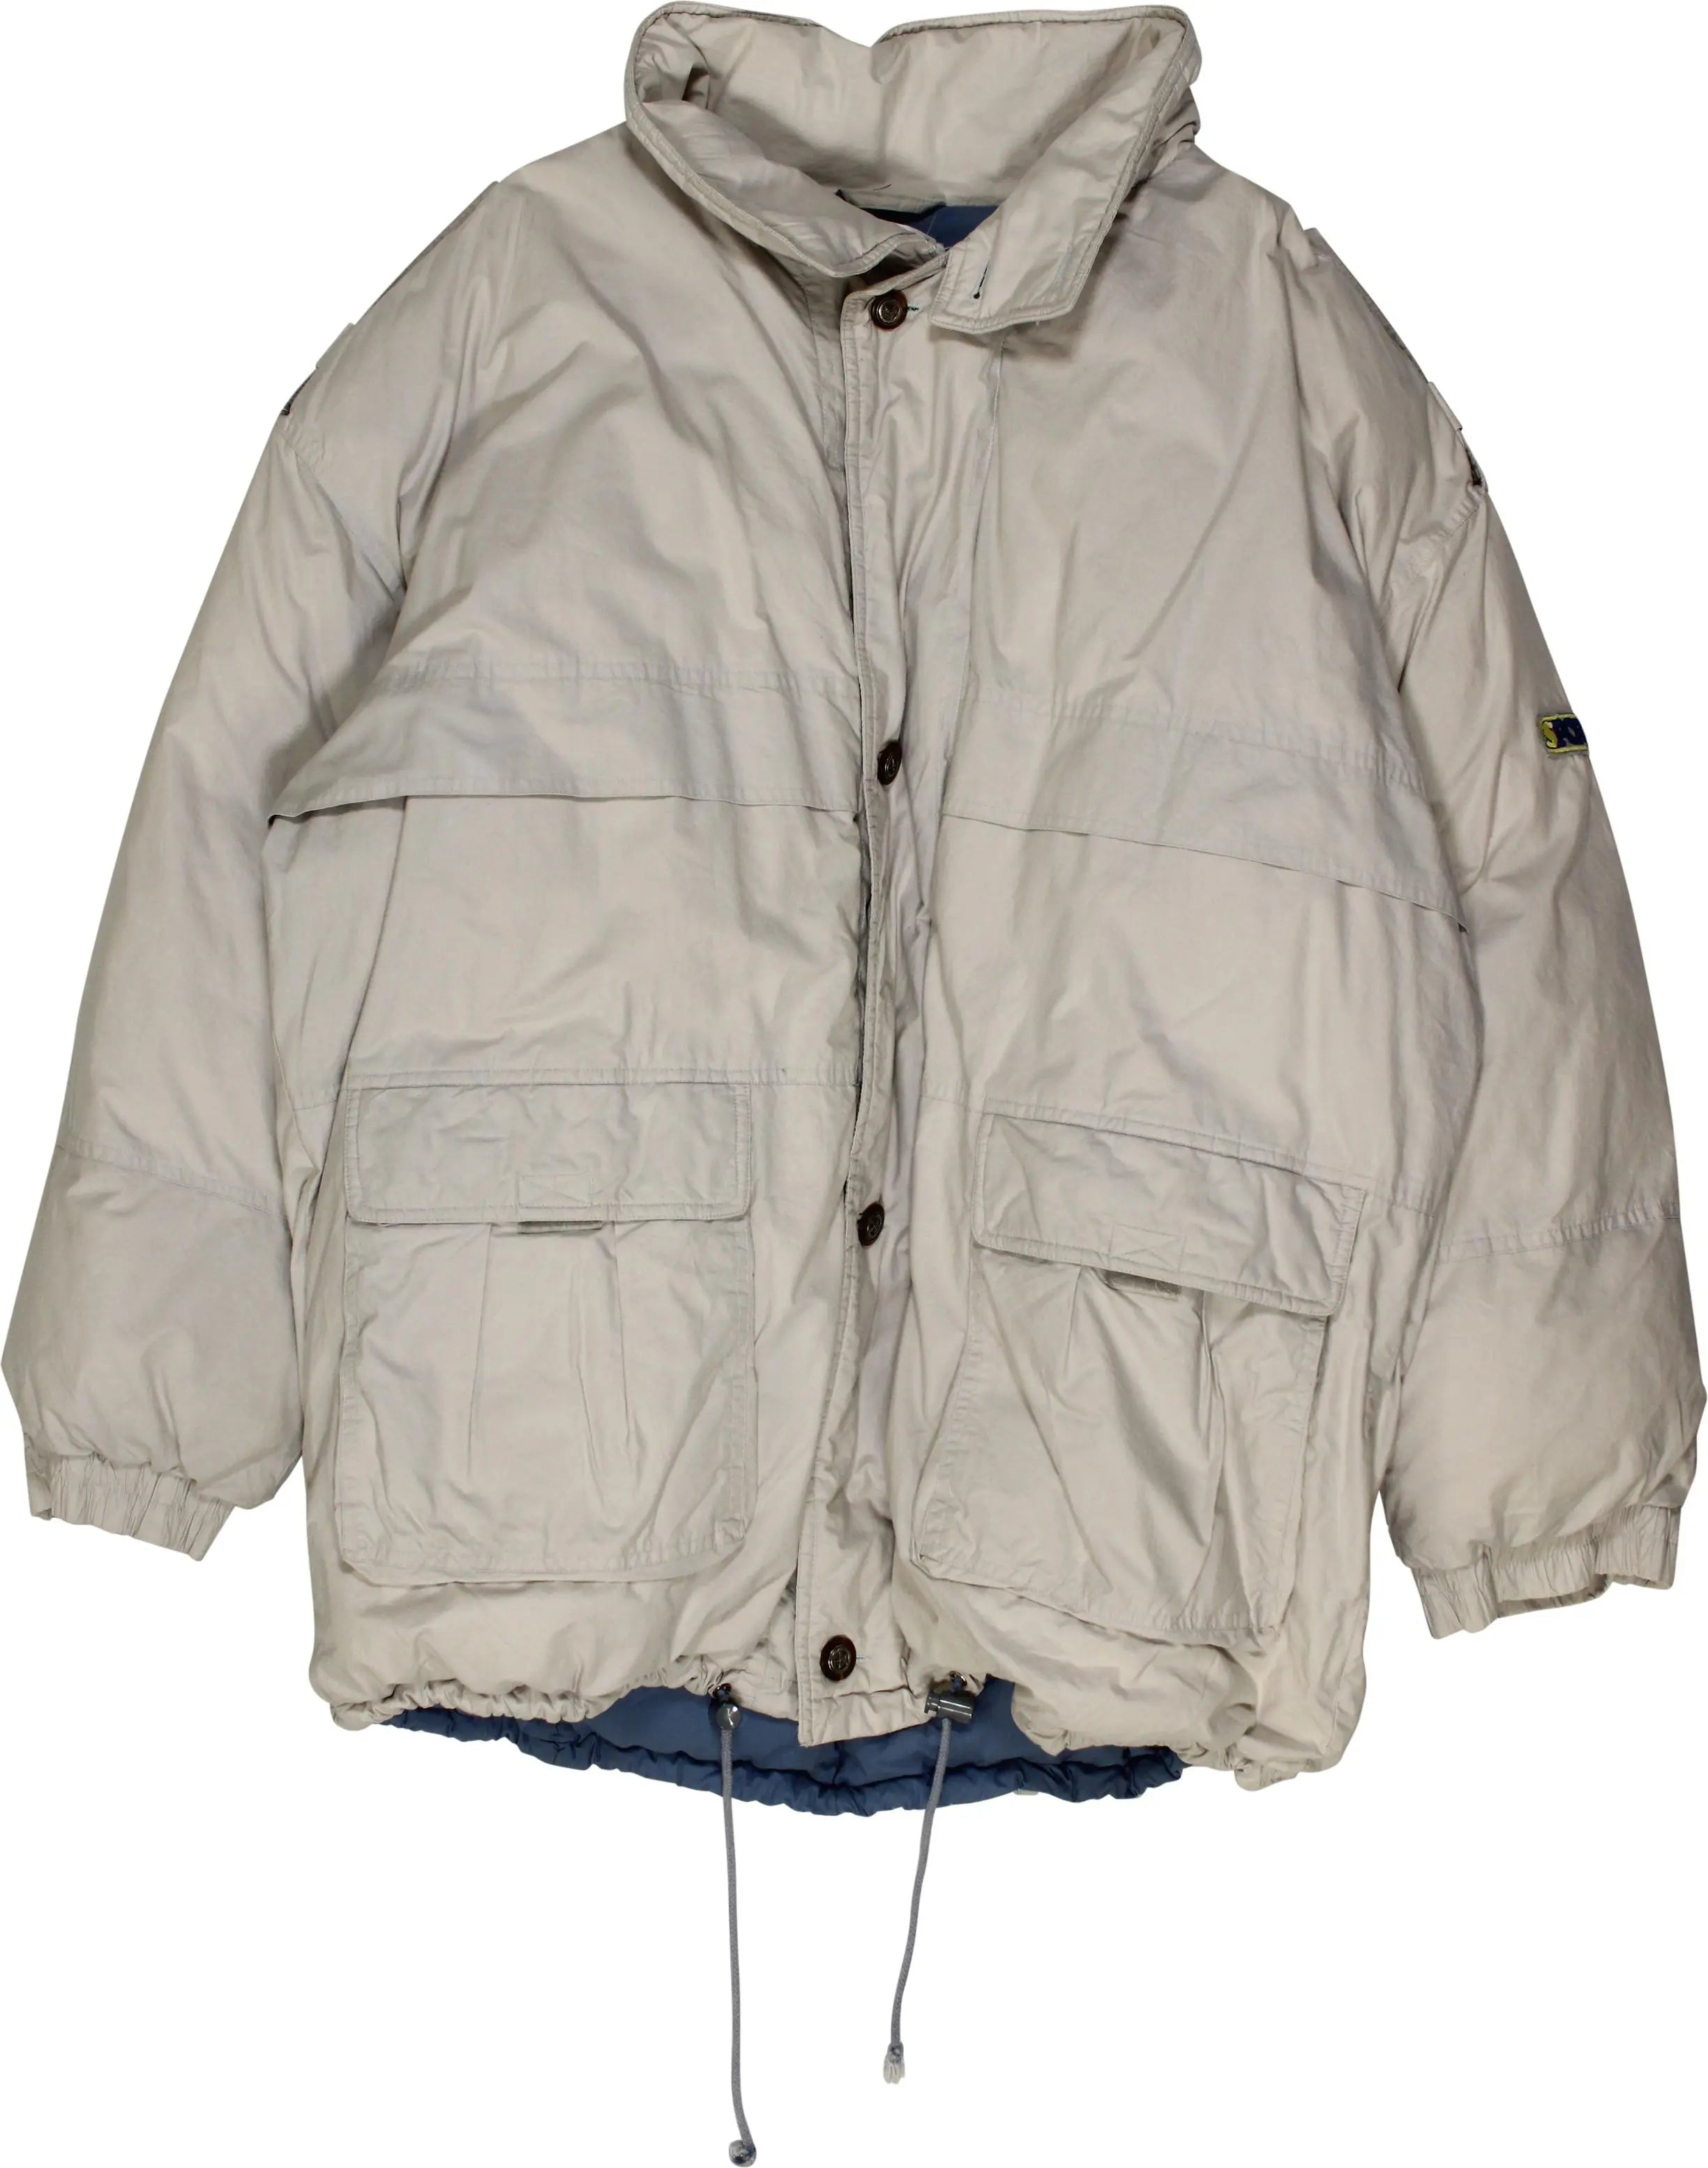 Natur Daunen - Jacket- ThriftTale.com - Vintage and second handclothing